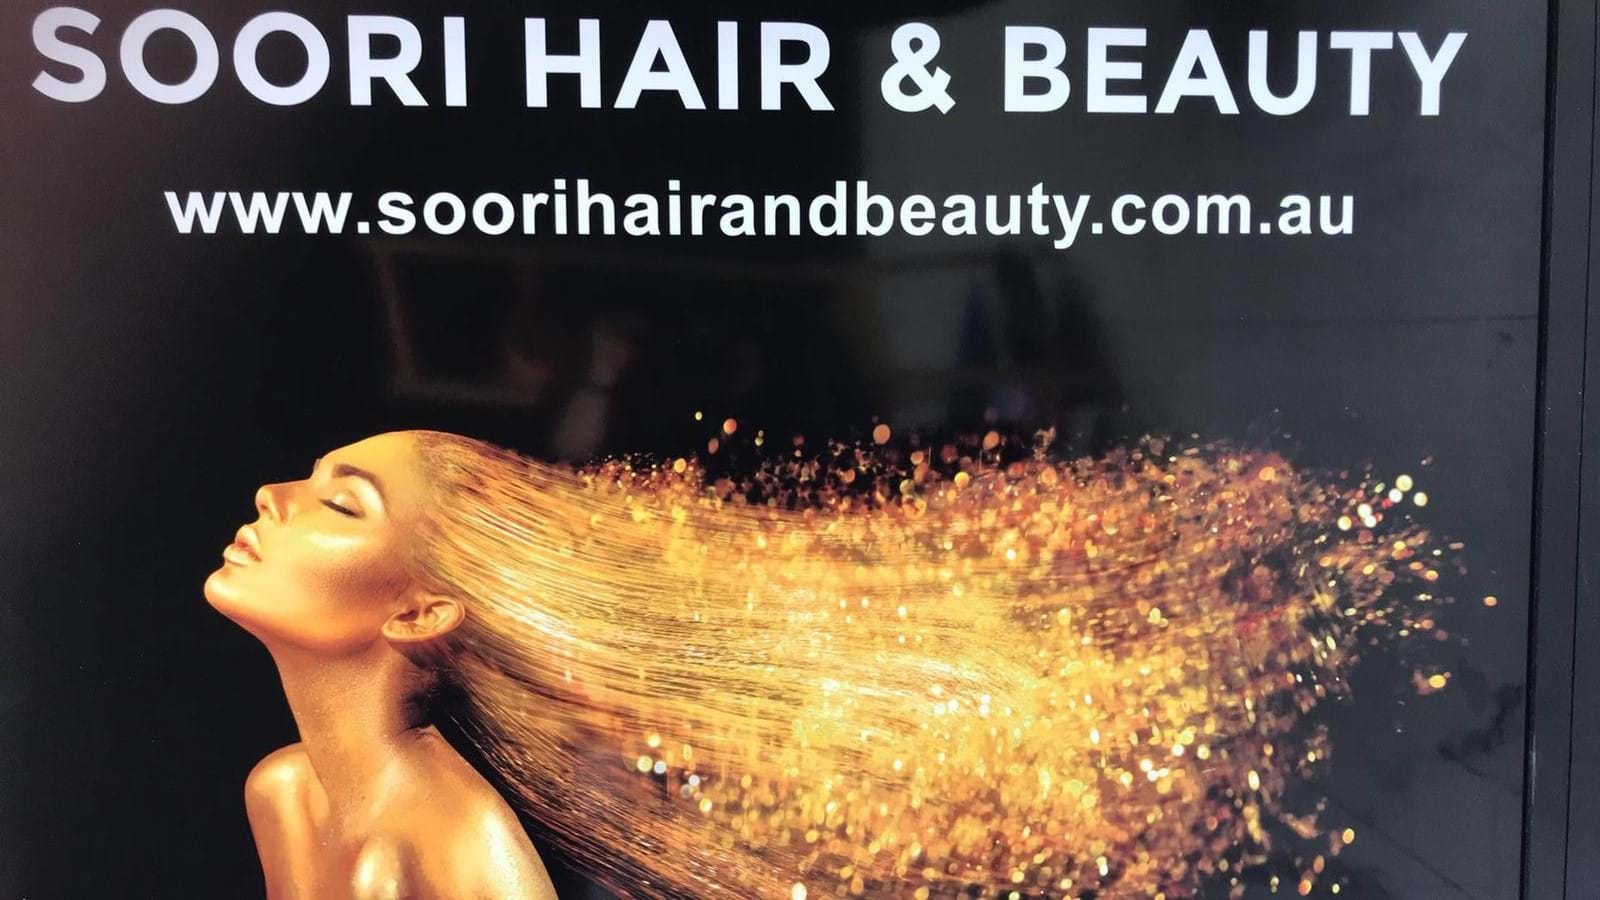 Soori Hair & Beauty Home page photo 1